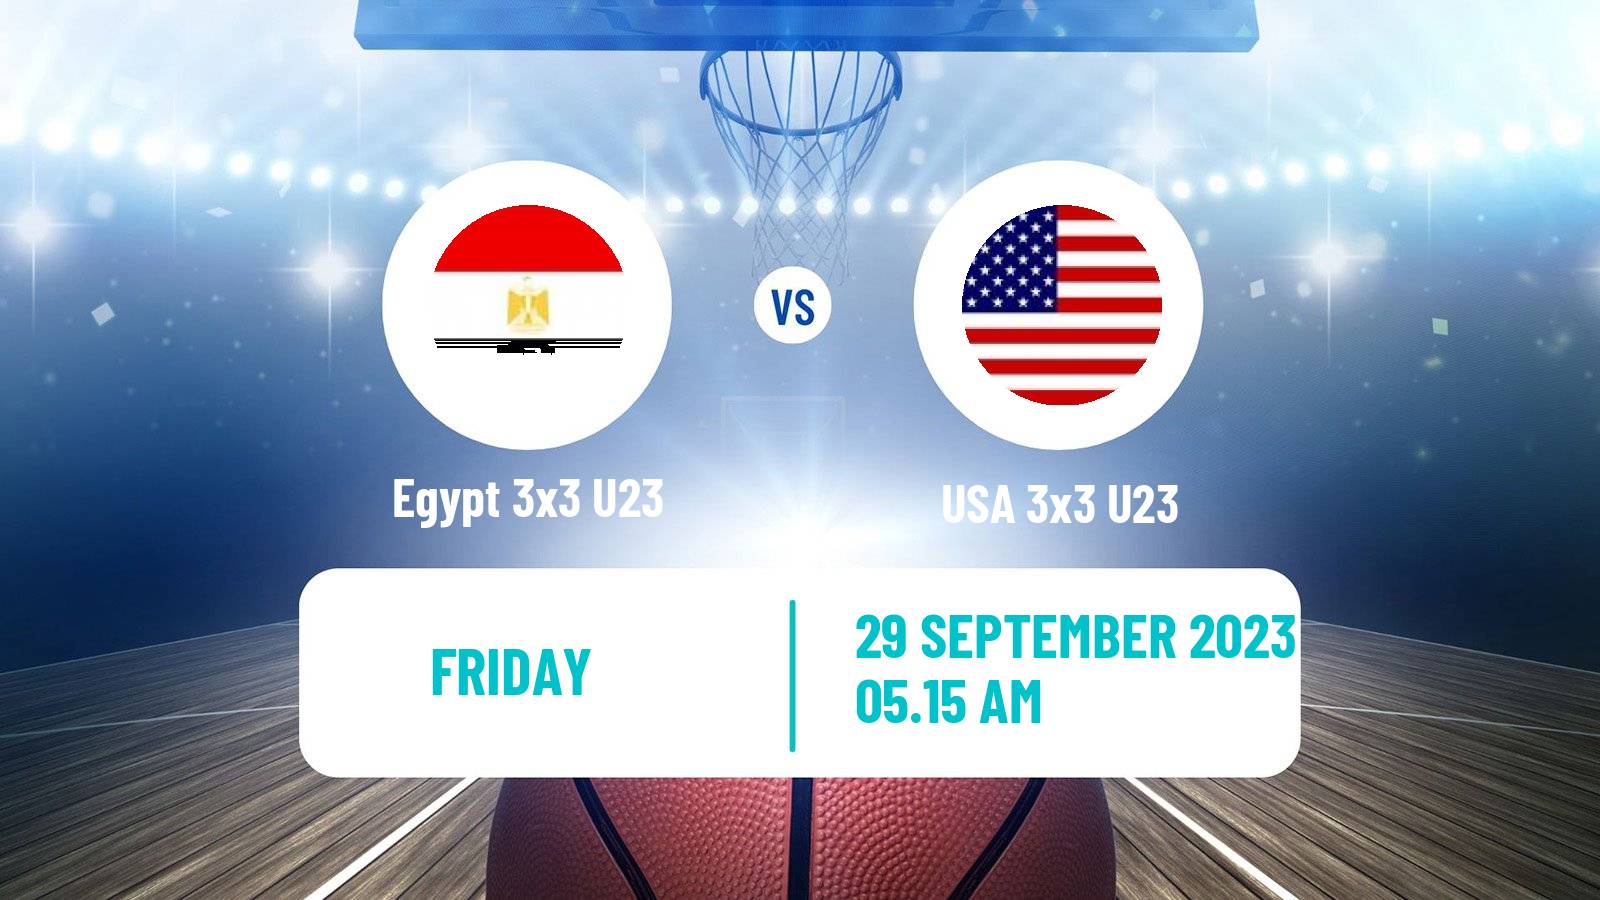 Basketball World Cup Basketball 3x3 U23 Egypt 3x3 U23 - USA 3x3 U23